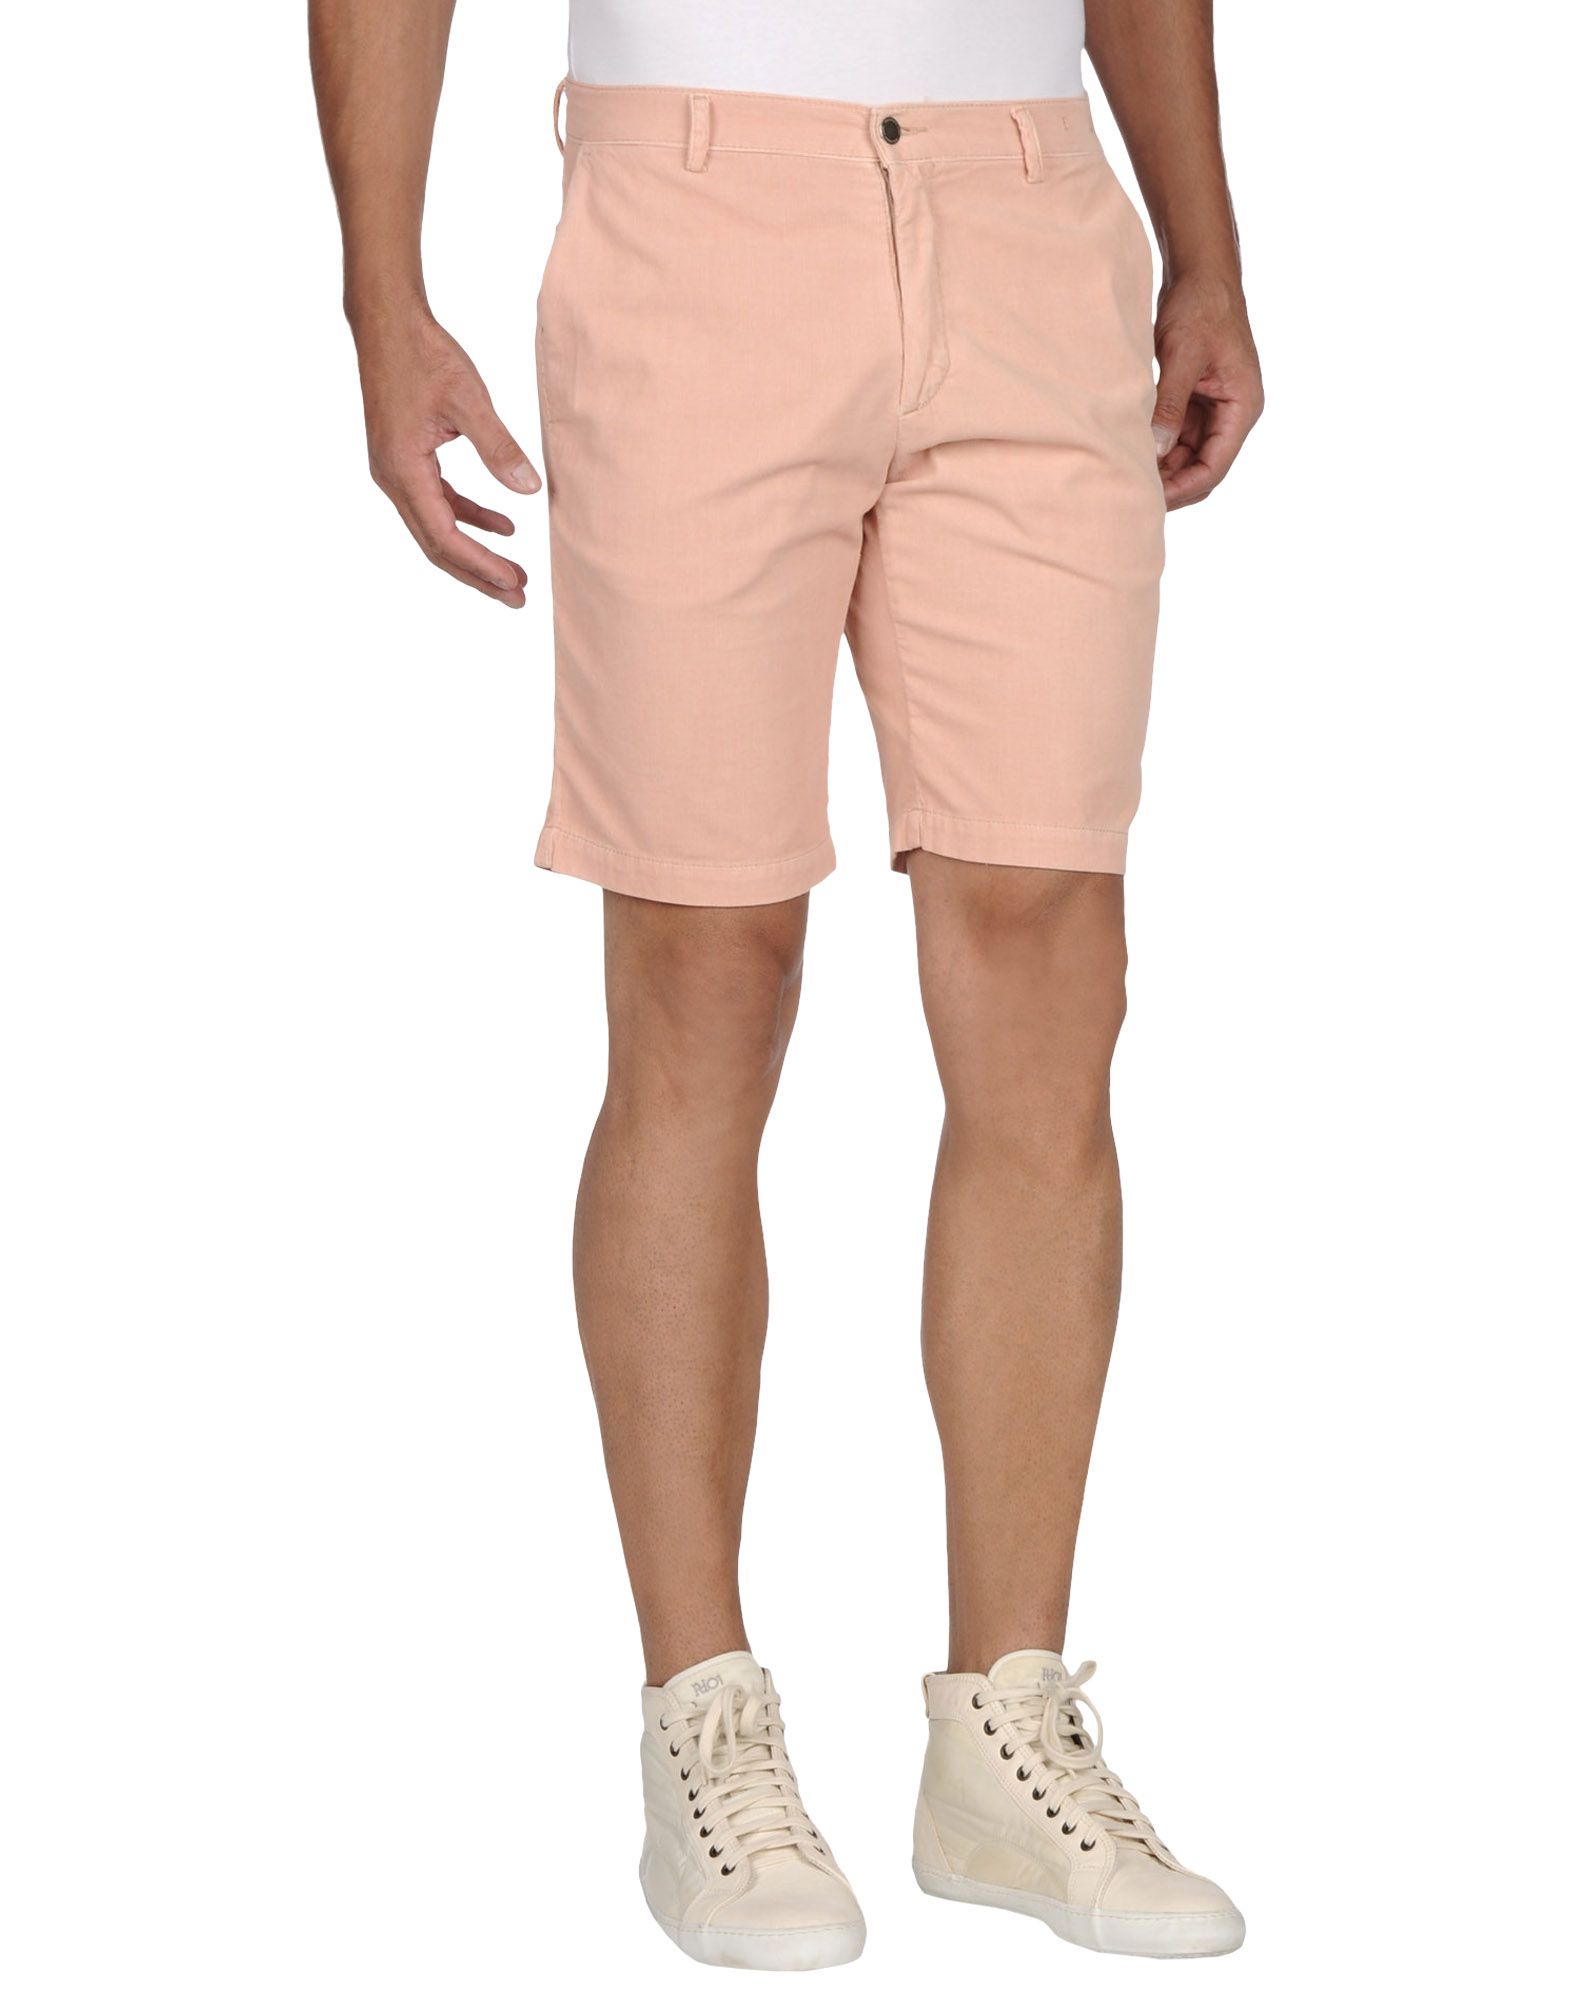 Massimo Alba Bermuda Shorts in Salmon Pink (Pink) for Men - Lyst